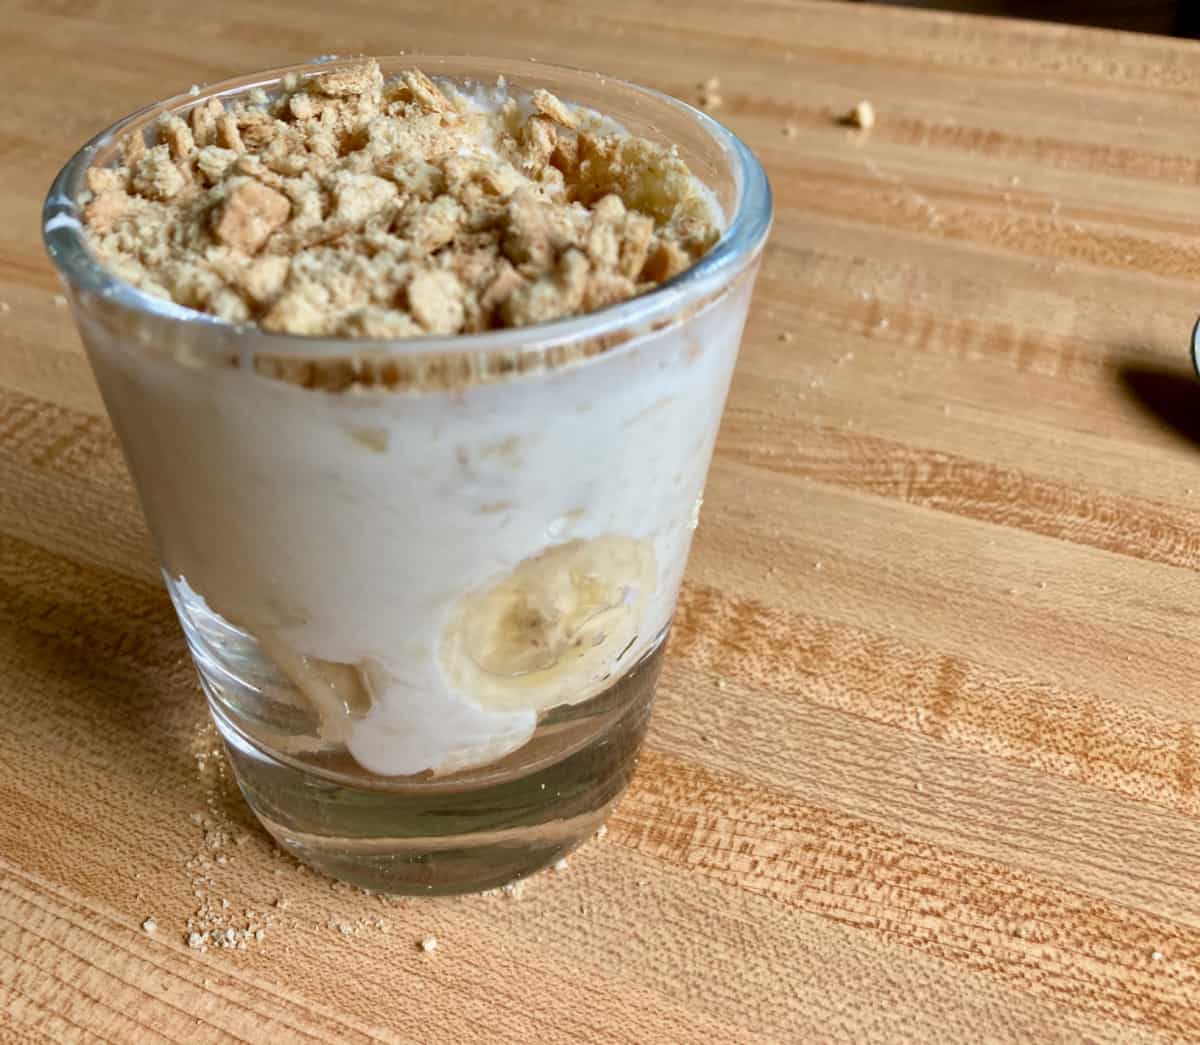 Homemade banana yogurt cup with crushed graham crackers